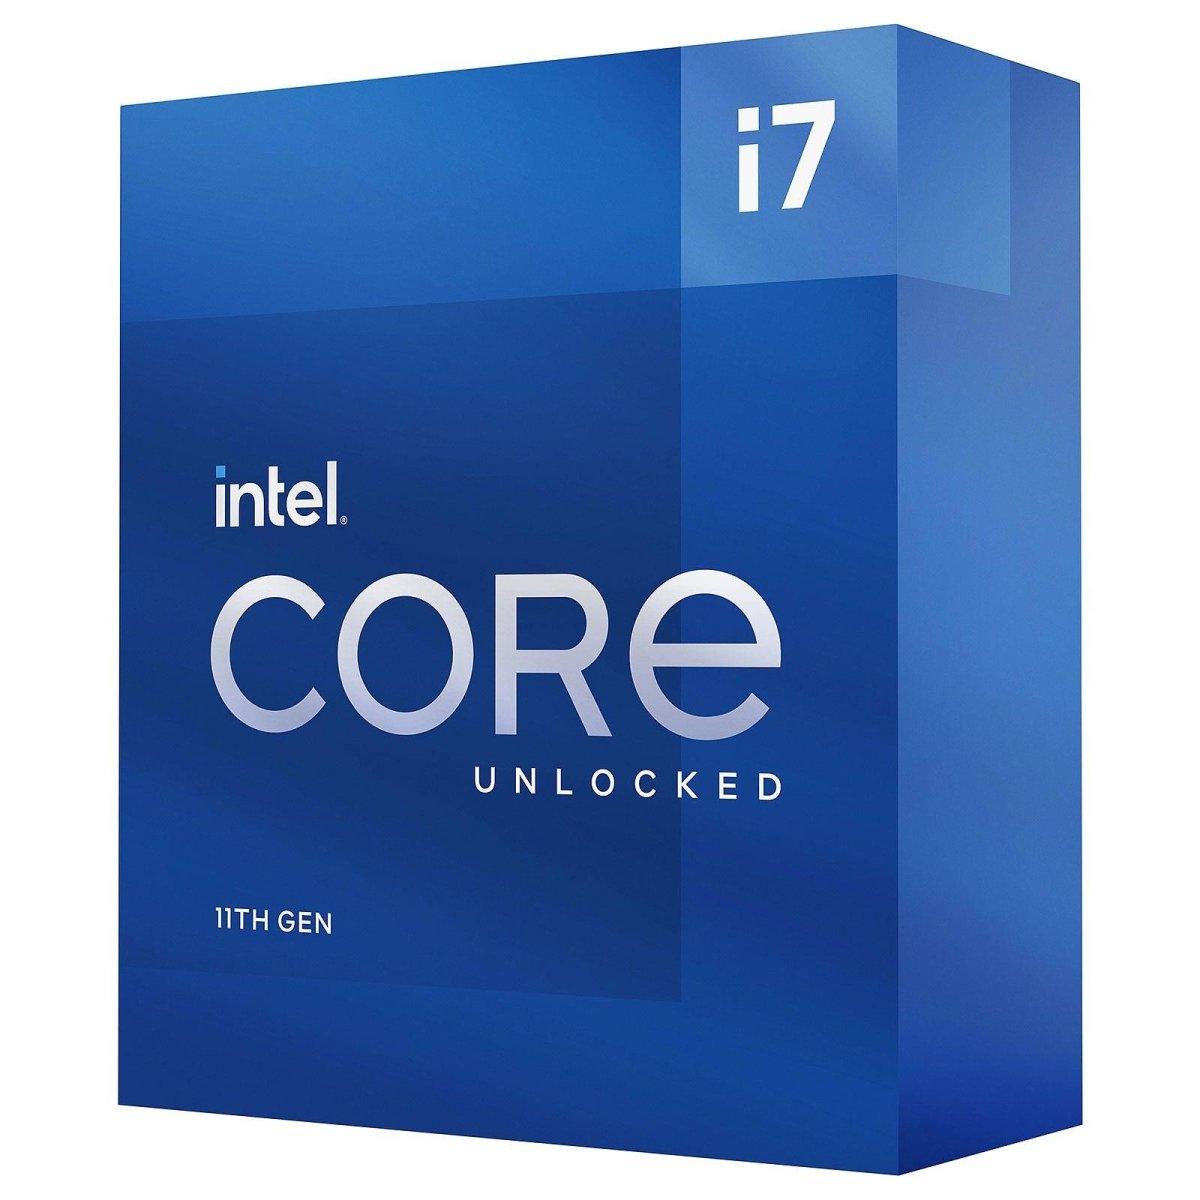 Intel Core i7-11700K Maroc Prix Processeur pas cher - Smartmarket.ma